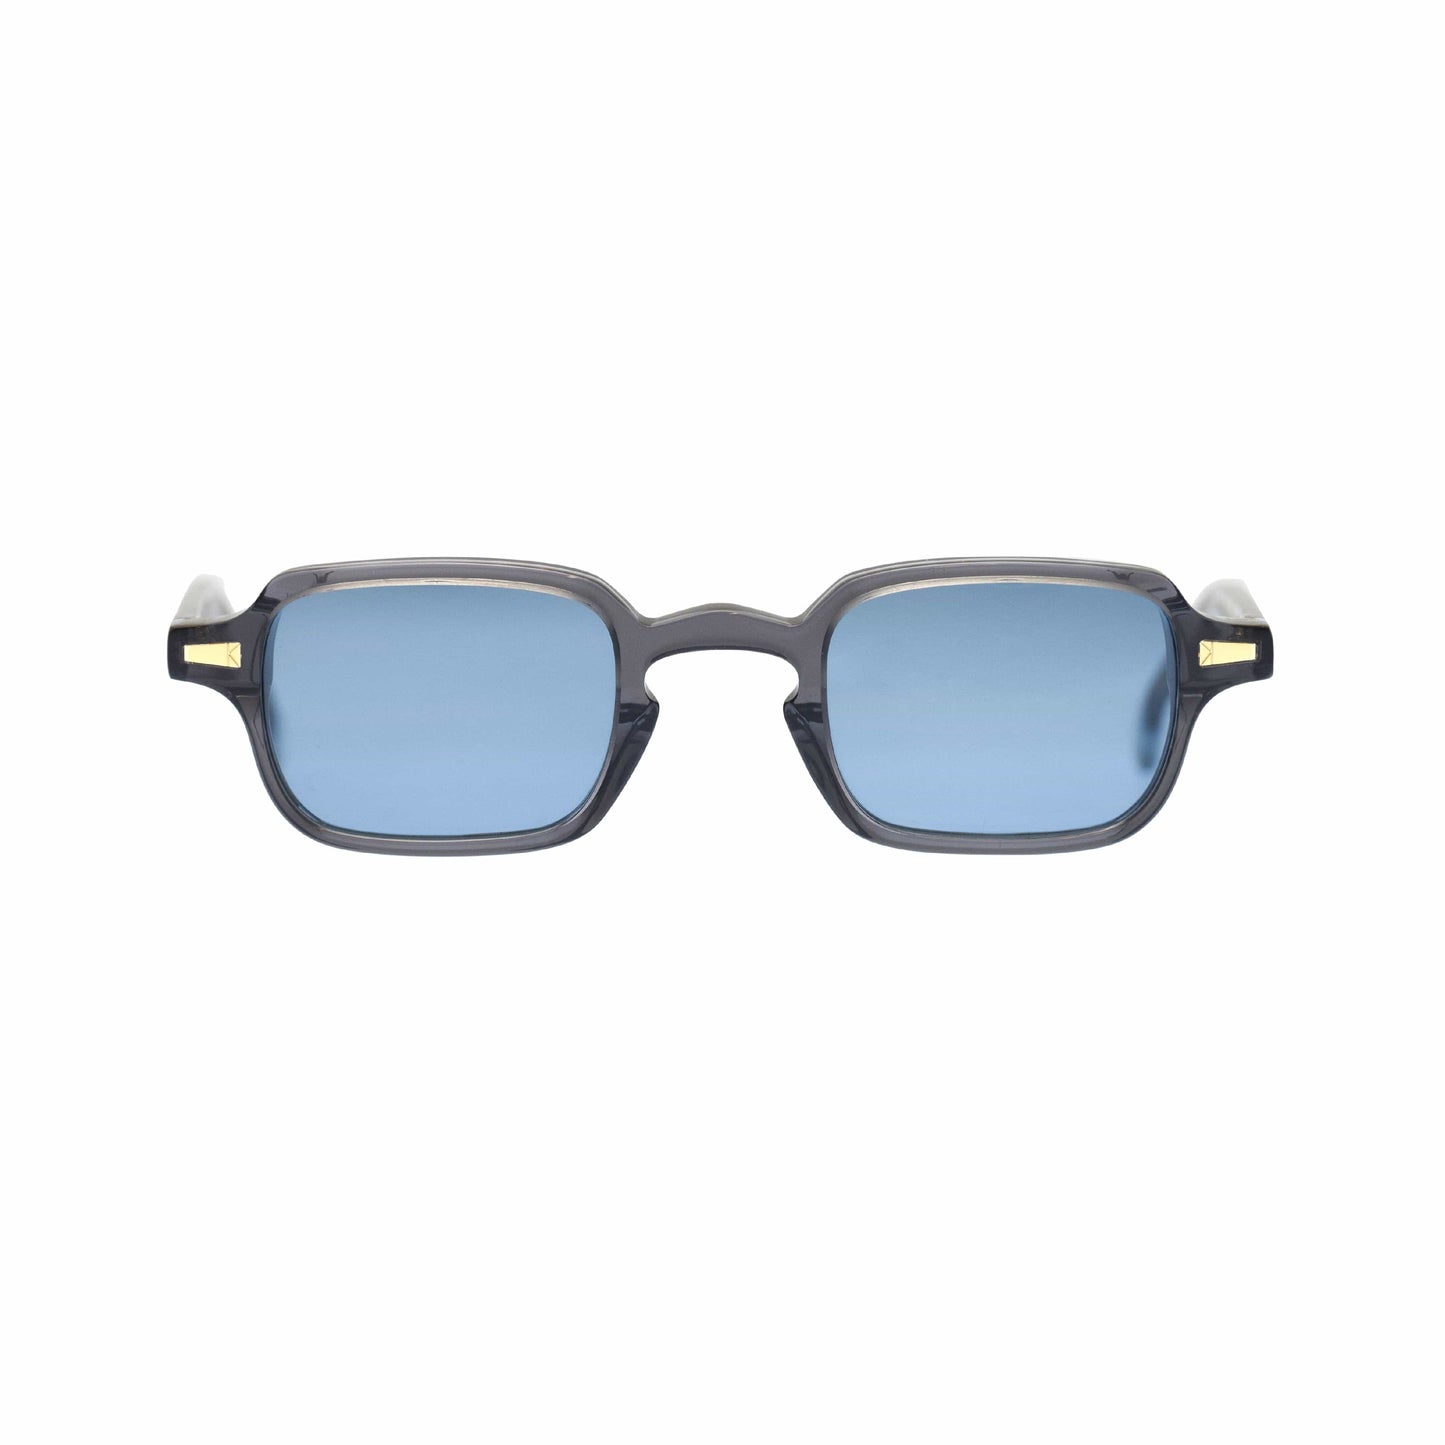 Kyme: Luigi - Spectaclo.com - eyewear store - Occhiali da sole - Trasparente grigio / Rettangolare / 44